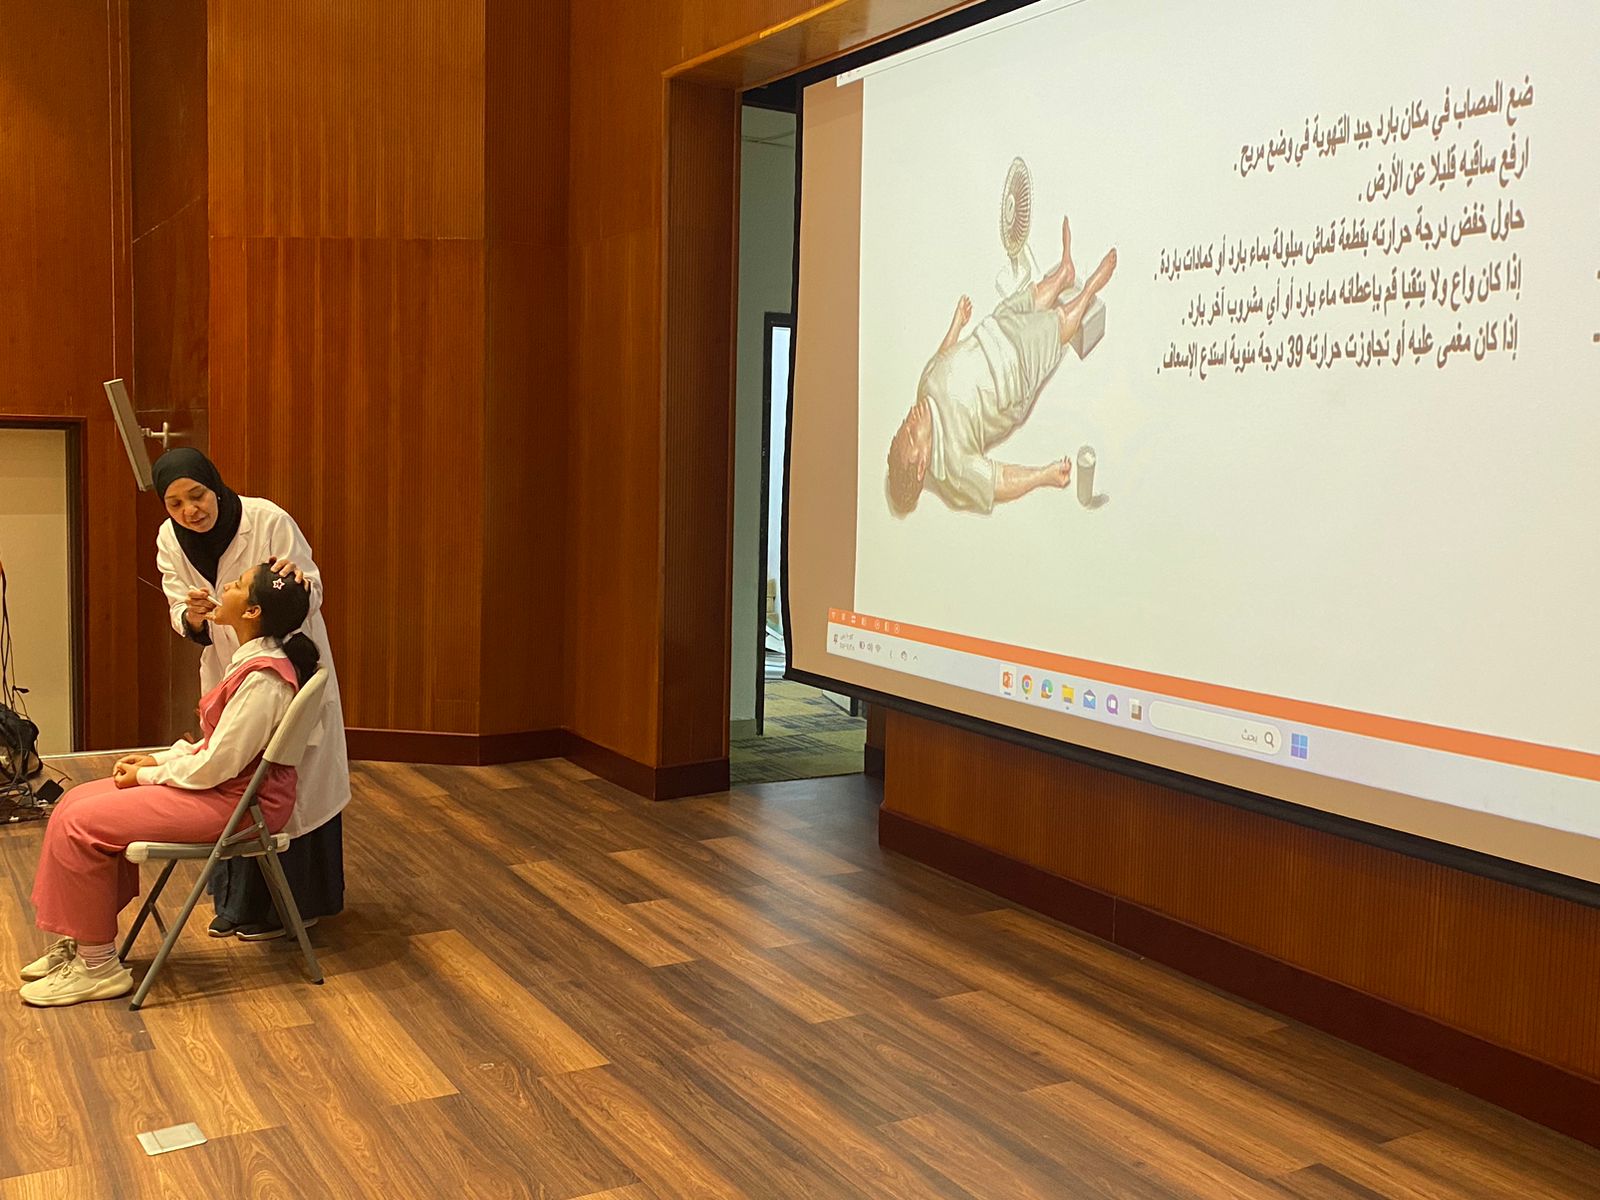 The nursing school offers a first aid course at the Princess Noura Bint Abdurrahman complex.